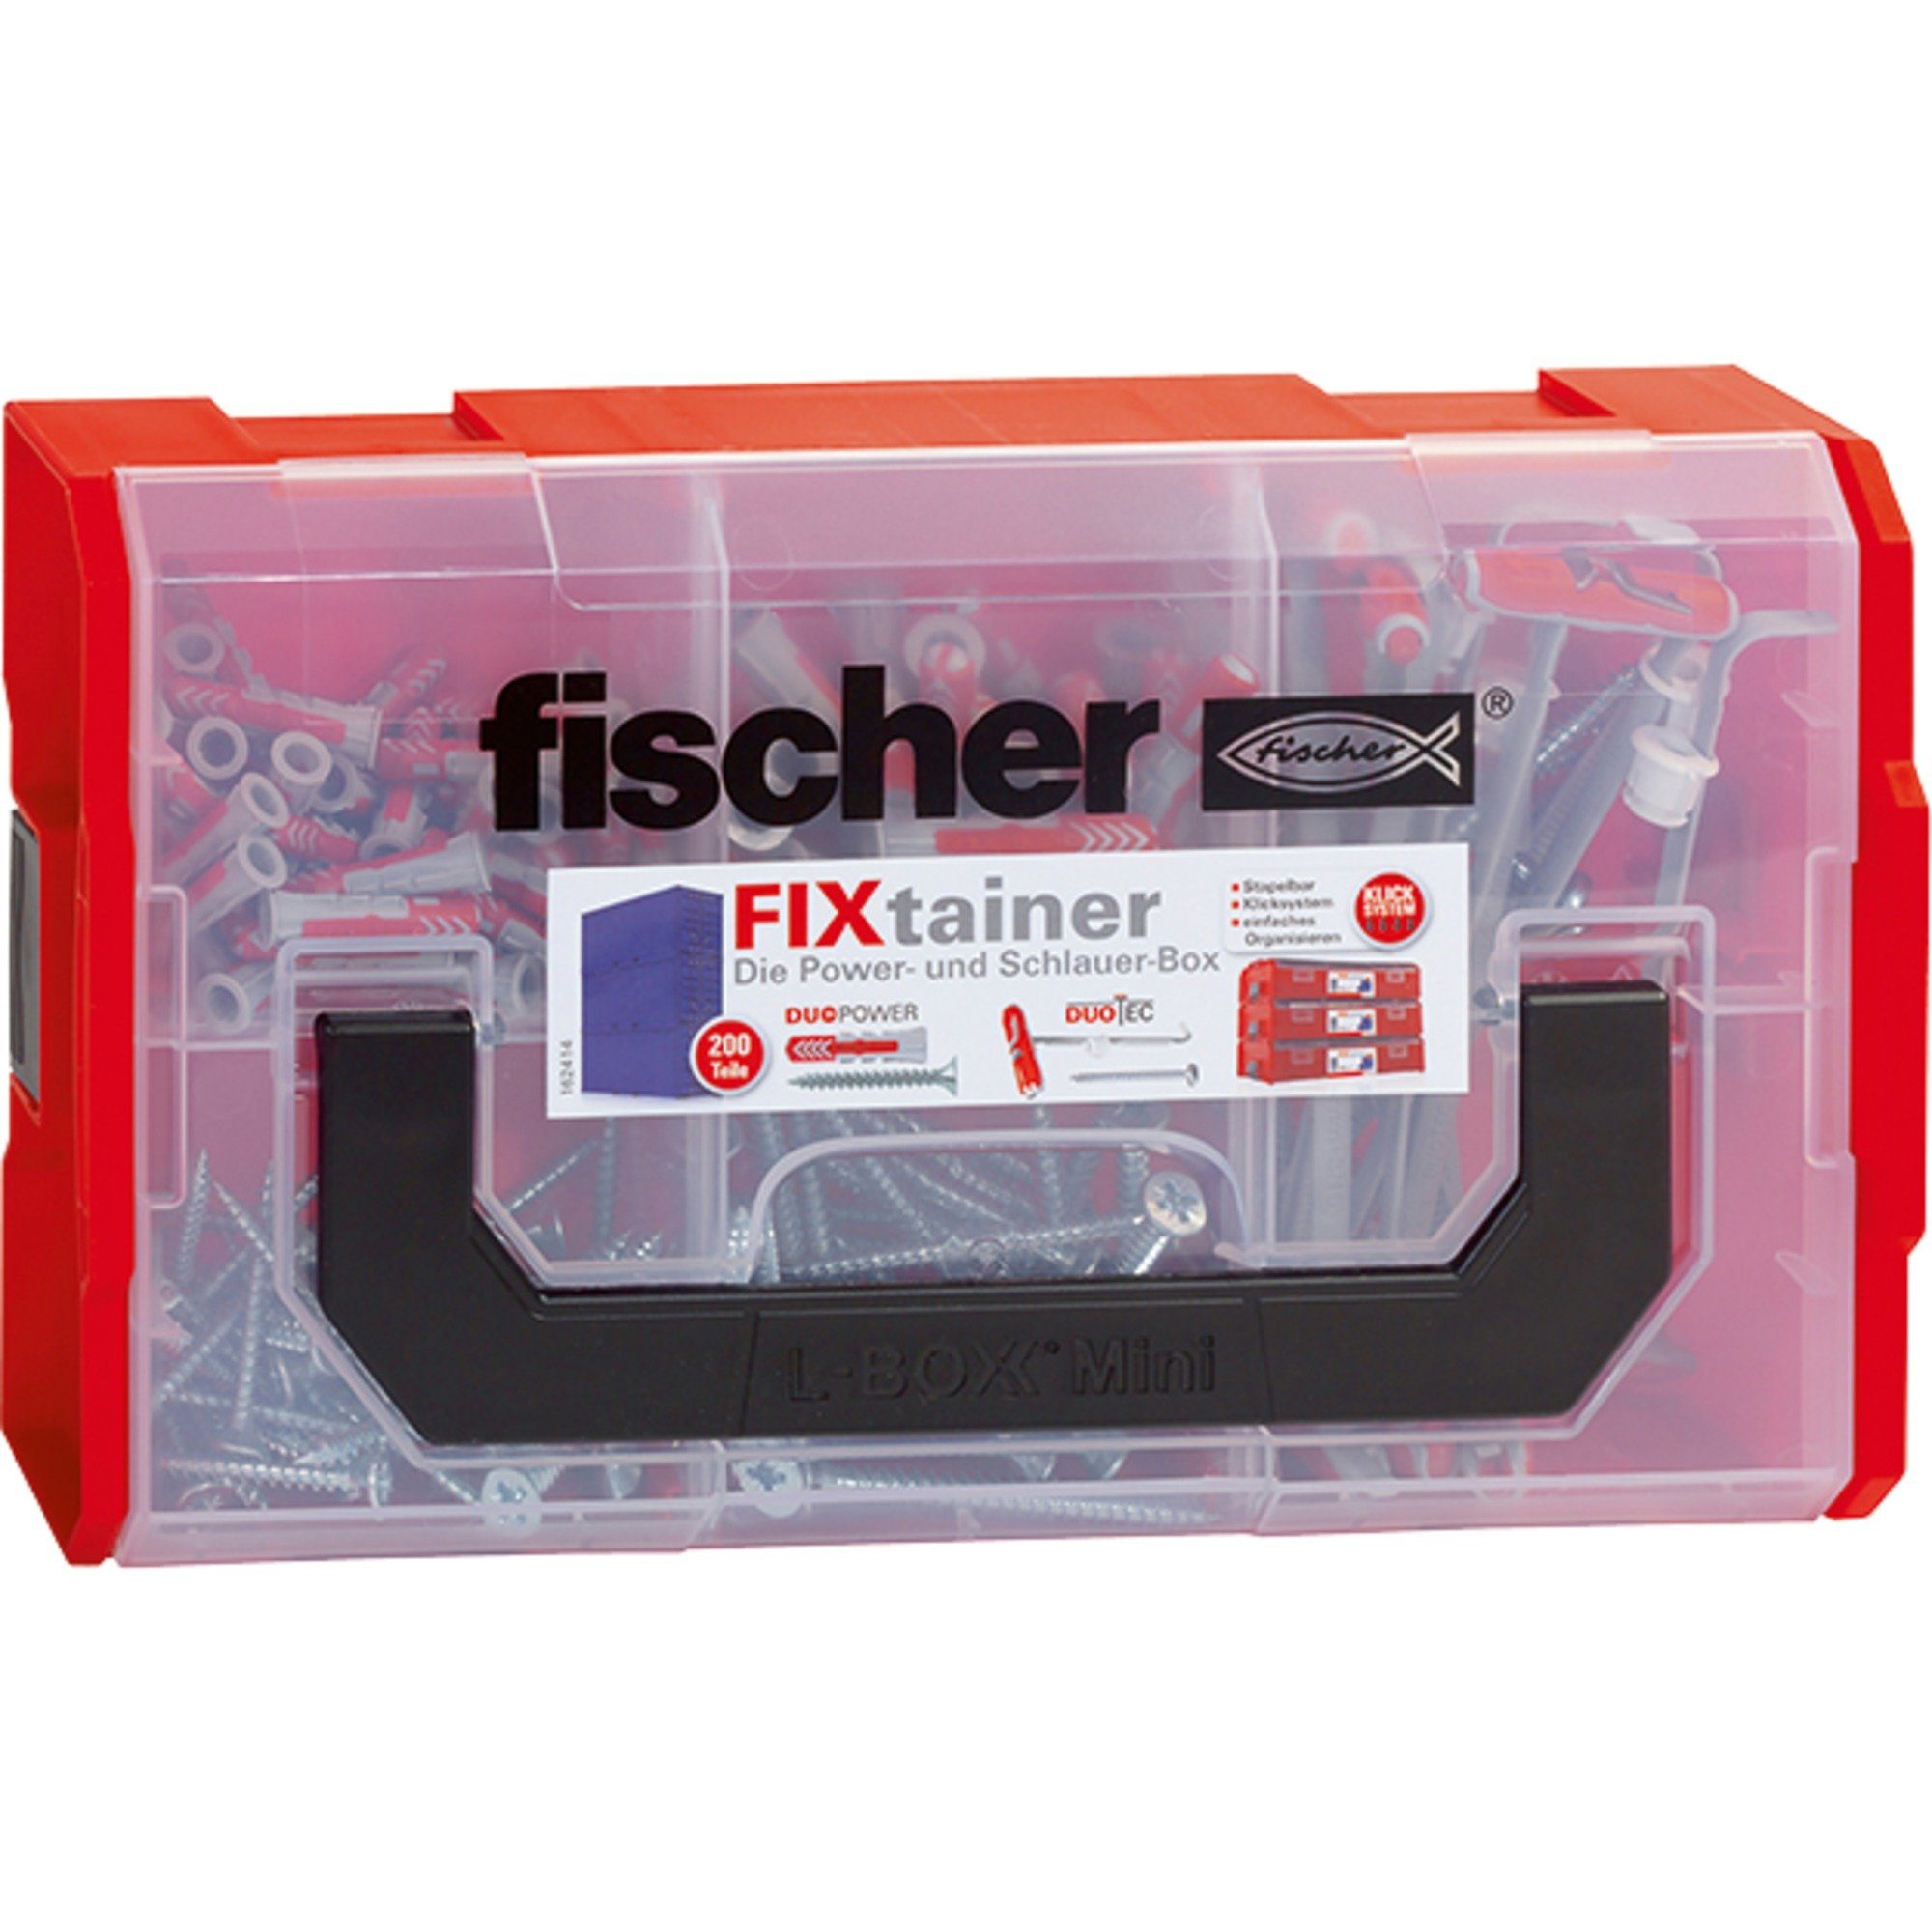 Fischer Universaldübel (mit FixTainer-DUOPOWER/DUOTEC, fischer Dübel